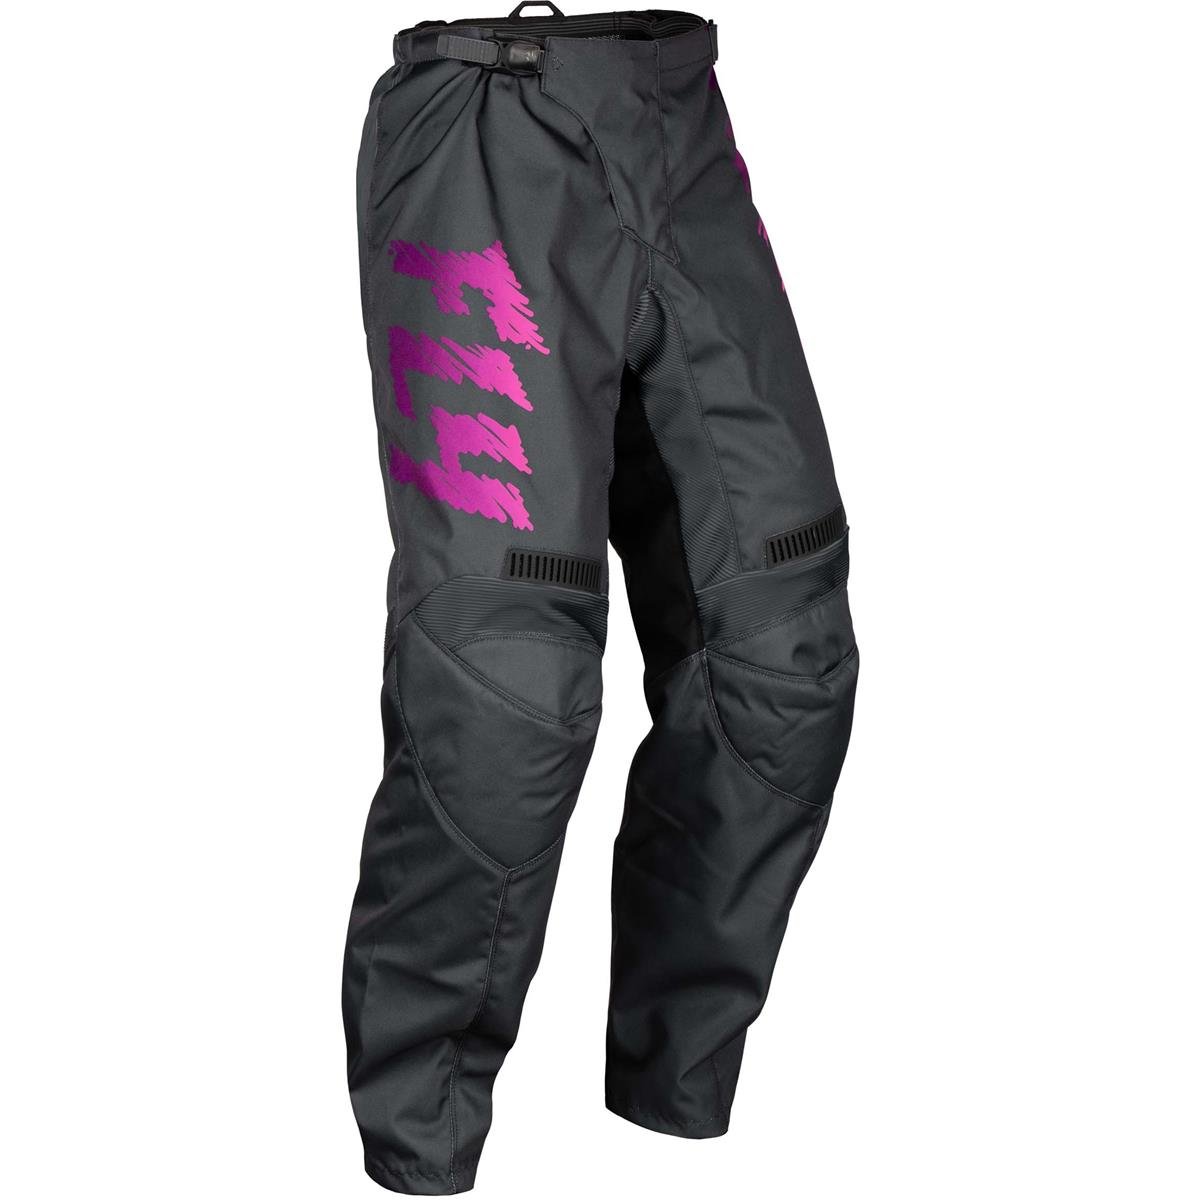 Fly Racing Pantalon MX pour Enfants F-16 Youth Gris/Charcoal/Pink